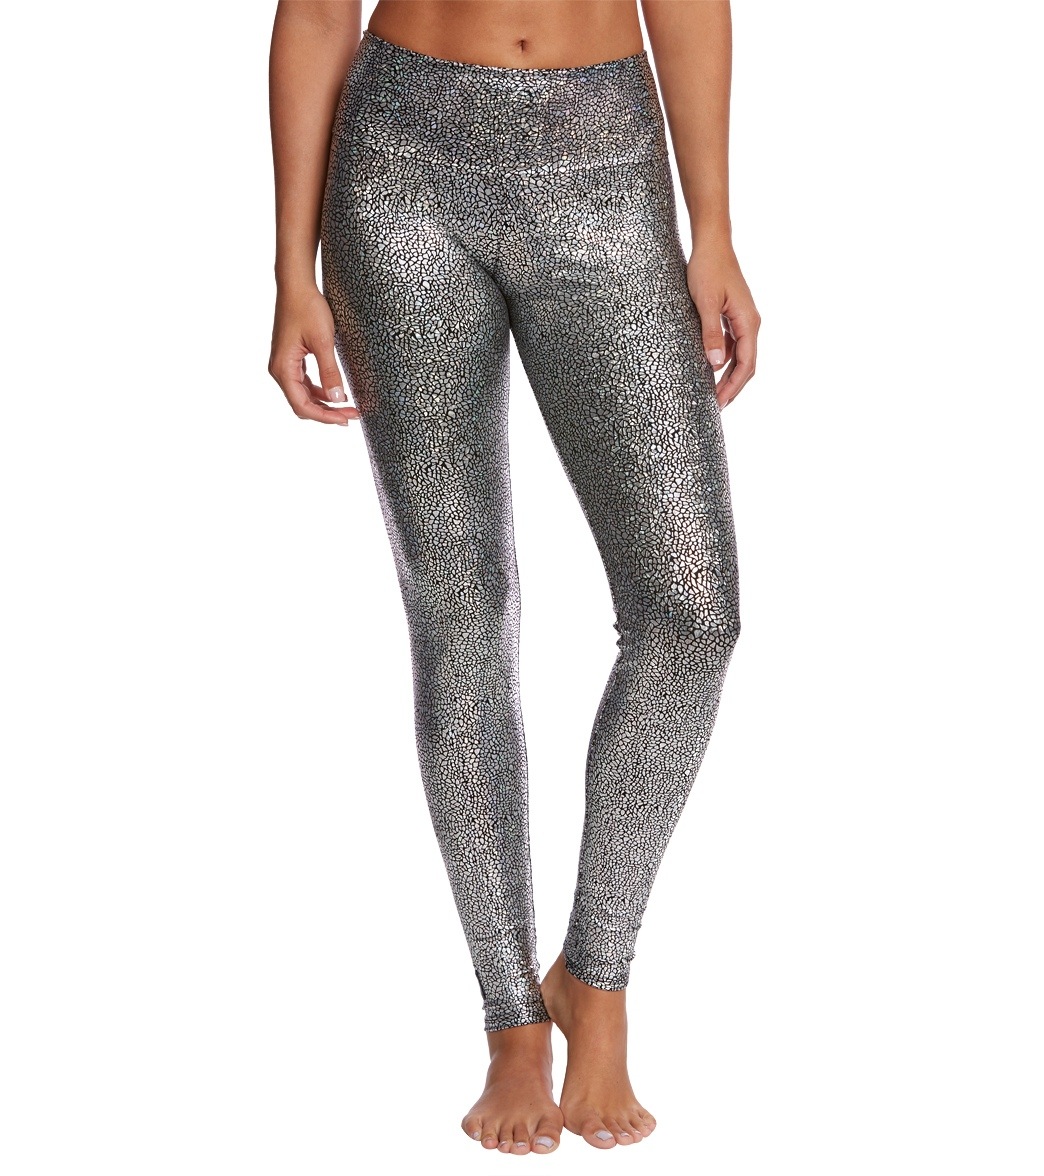 silver yoga pants